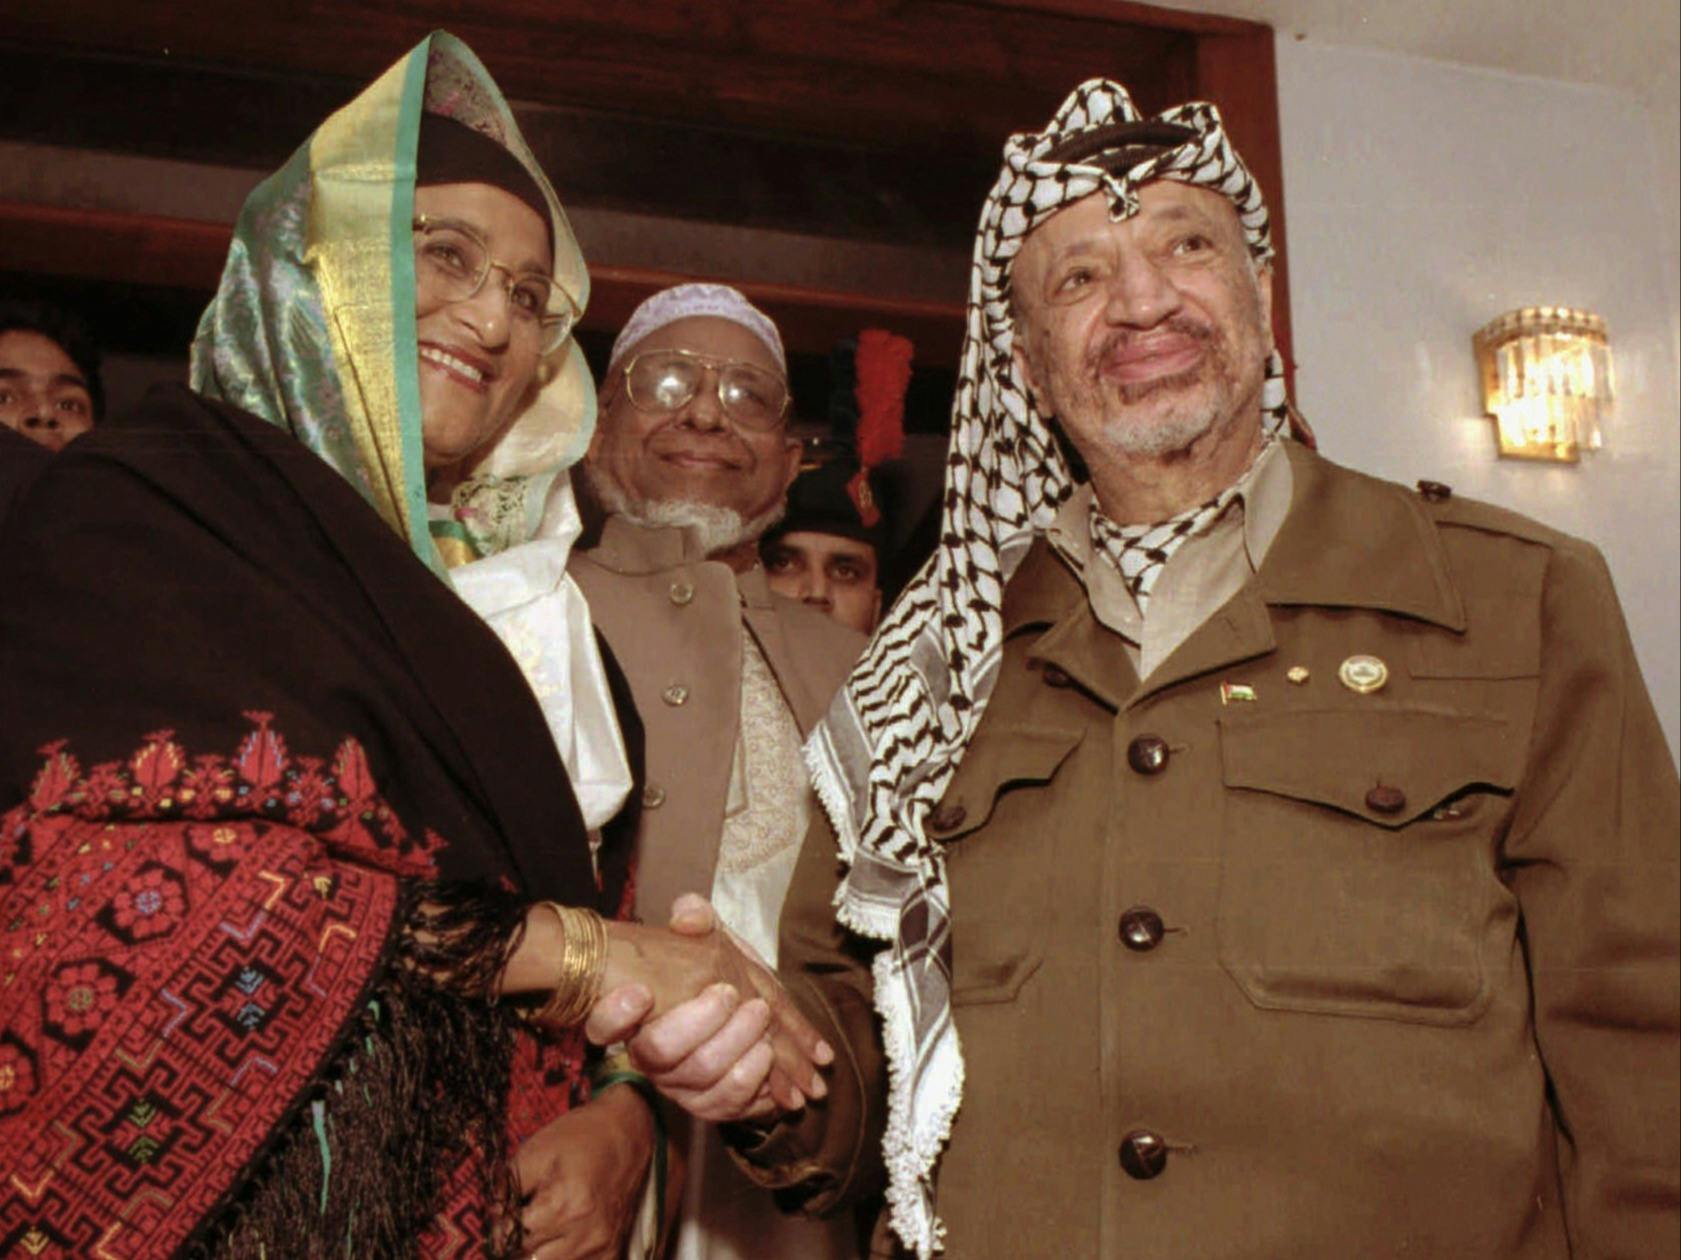 Palestinian leader Yasser Arafat (R) and Sheikh Hasina (L) in Dhaka on June 20, 1996. Abdus Samad Azad, Hasina's aide, at center (AP Photo/Pavel Rahman)